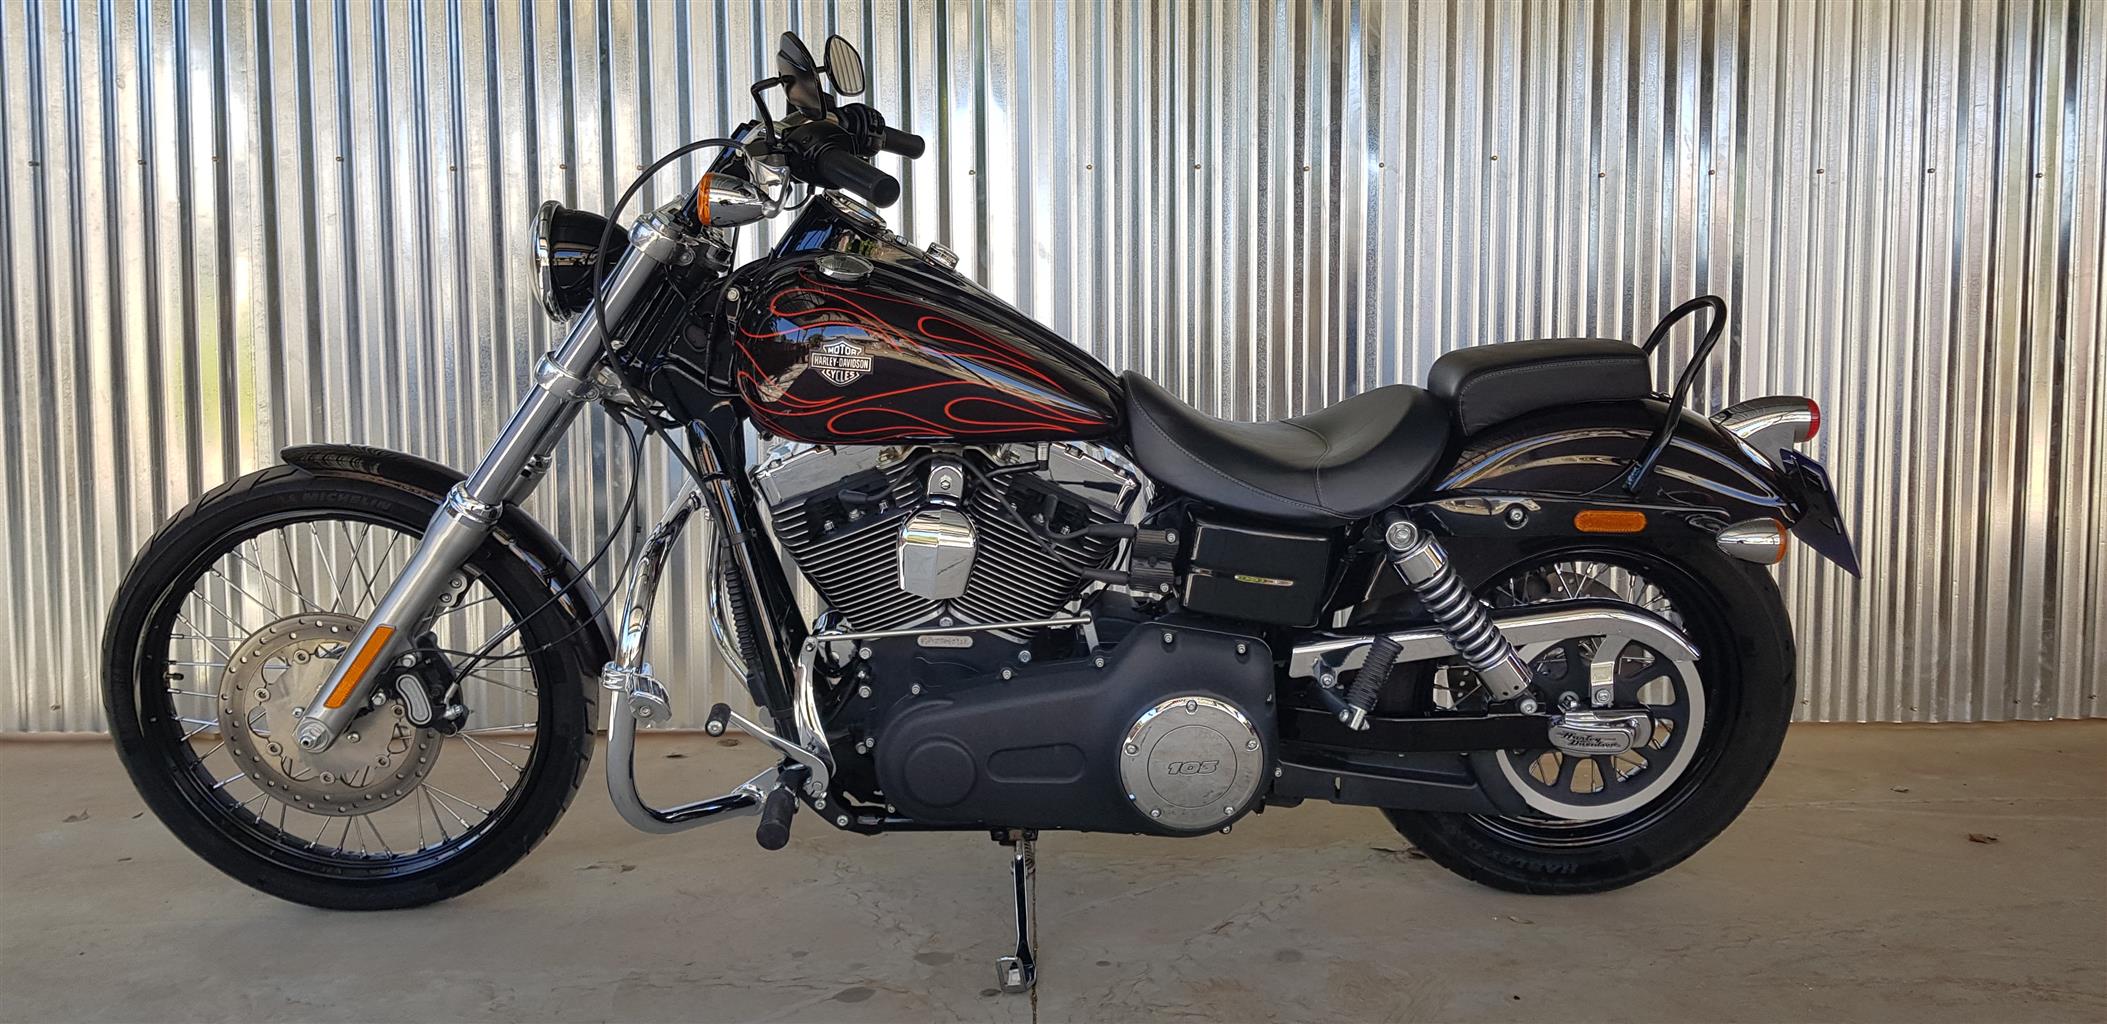 2014 Harley Davidson Dyna Wide Glide Junk Mail